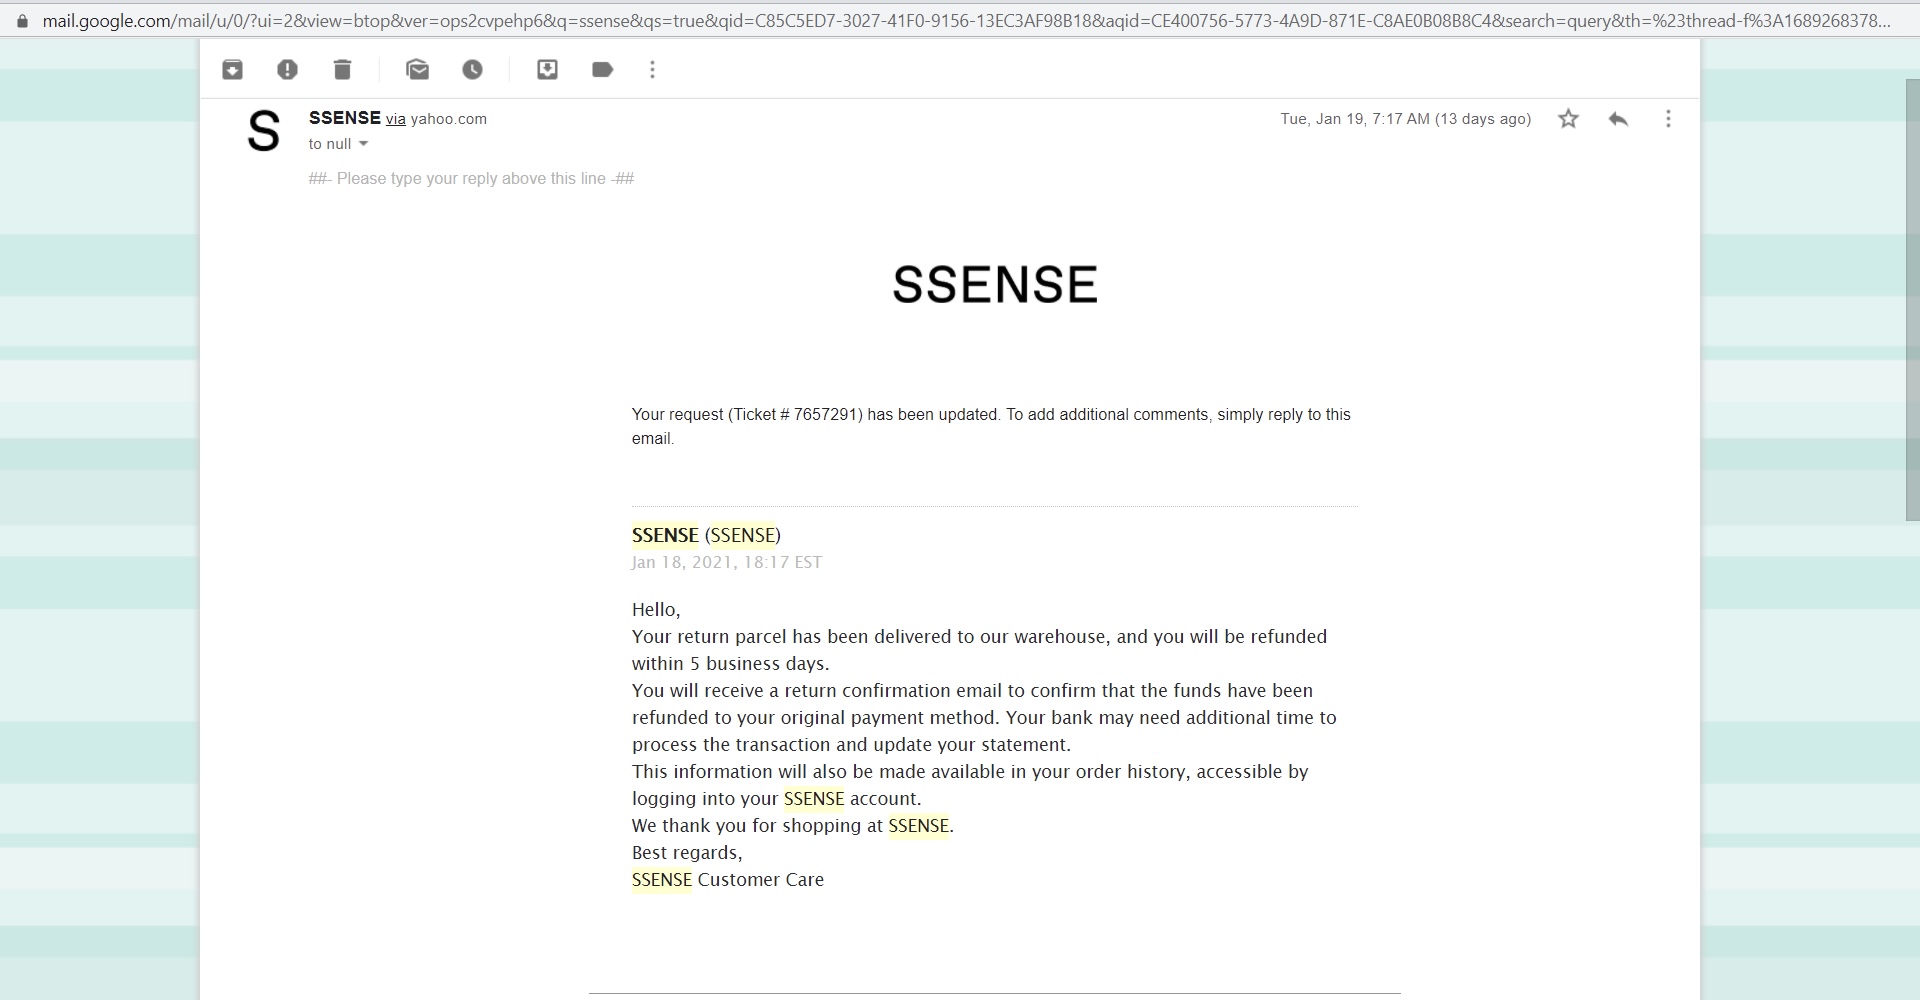 ssense site